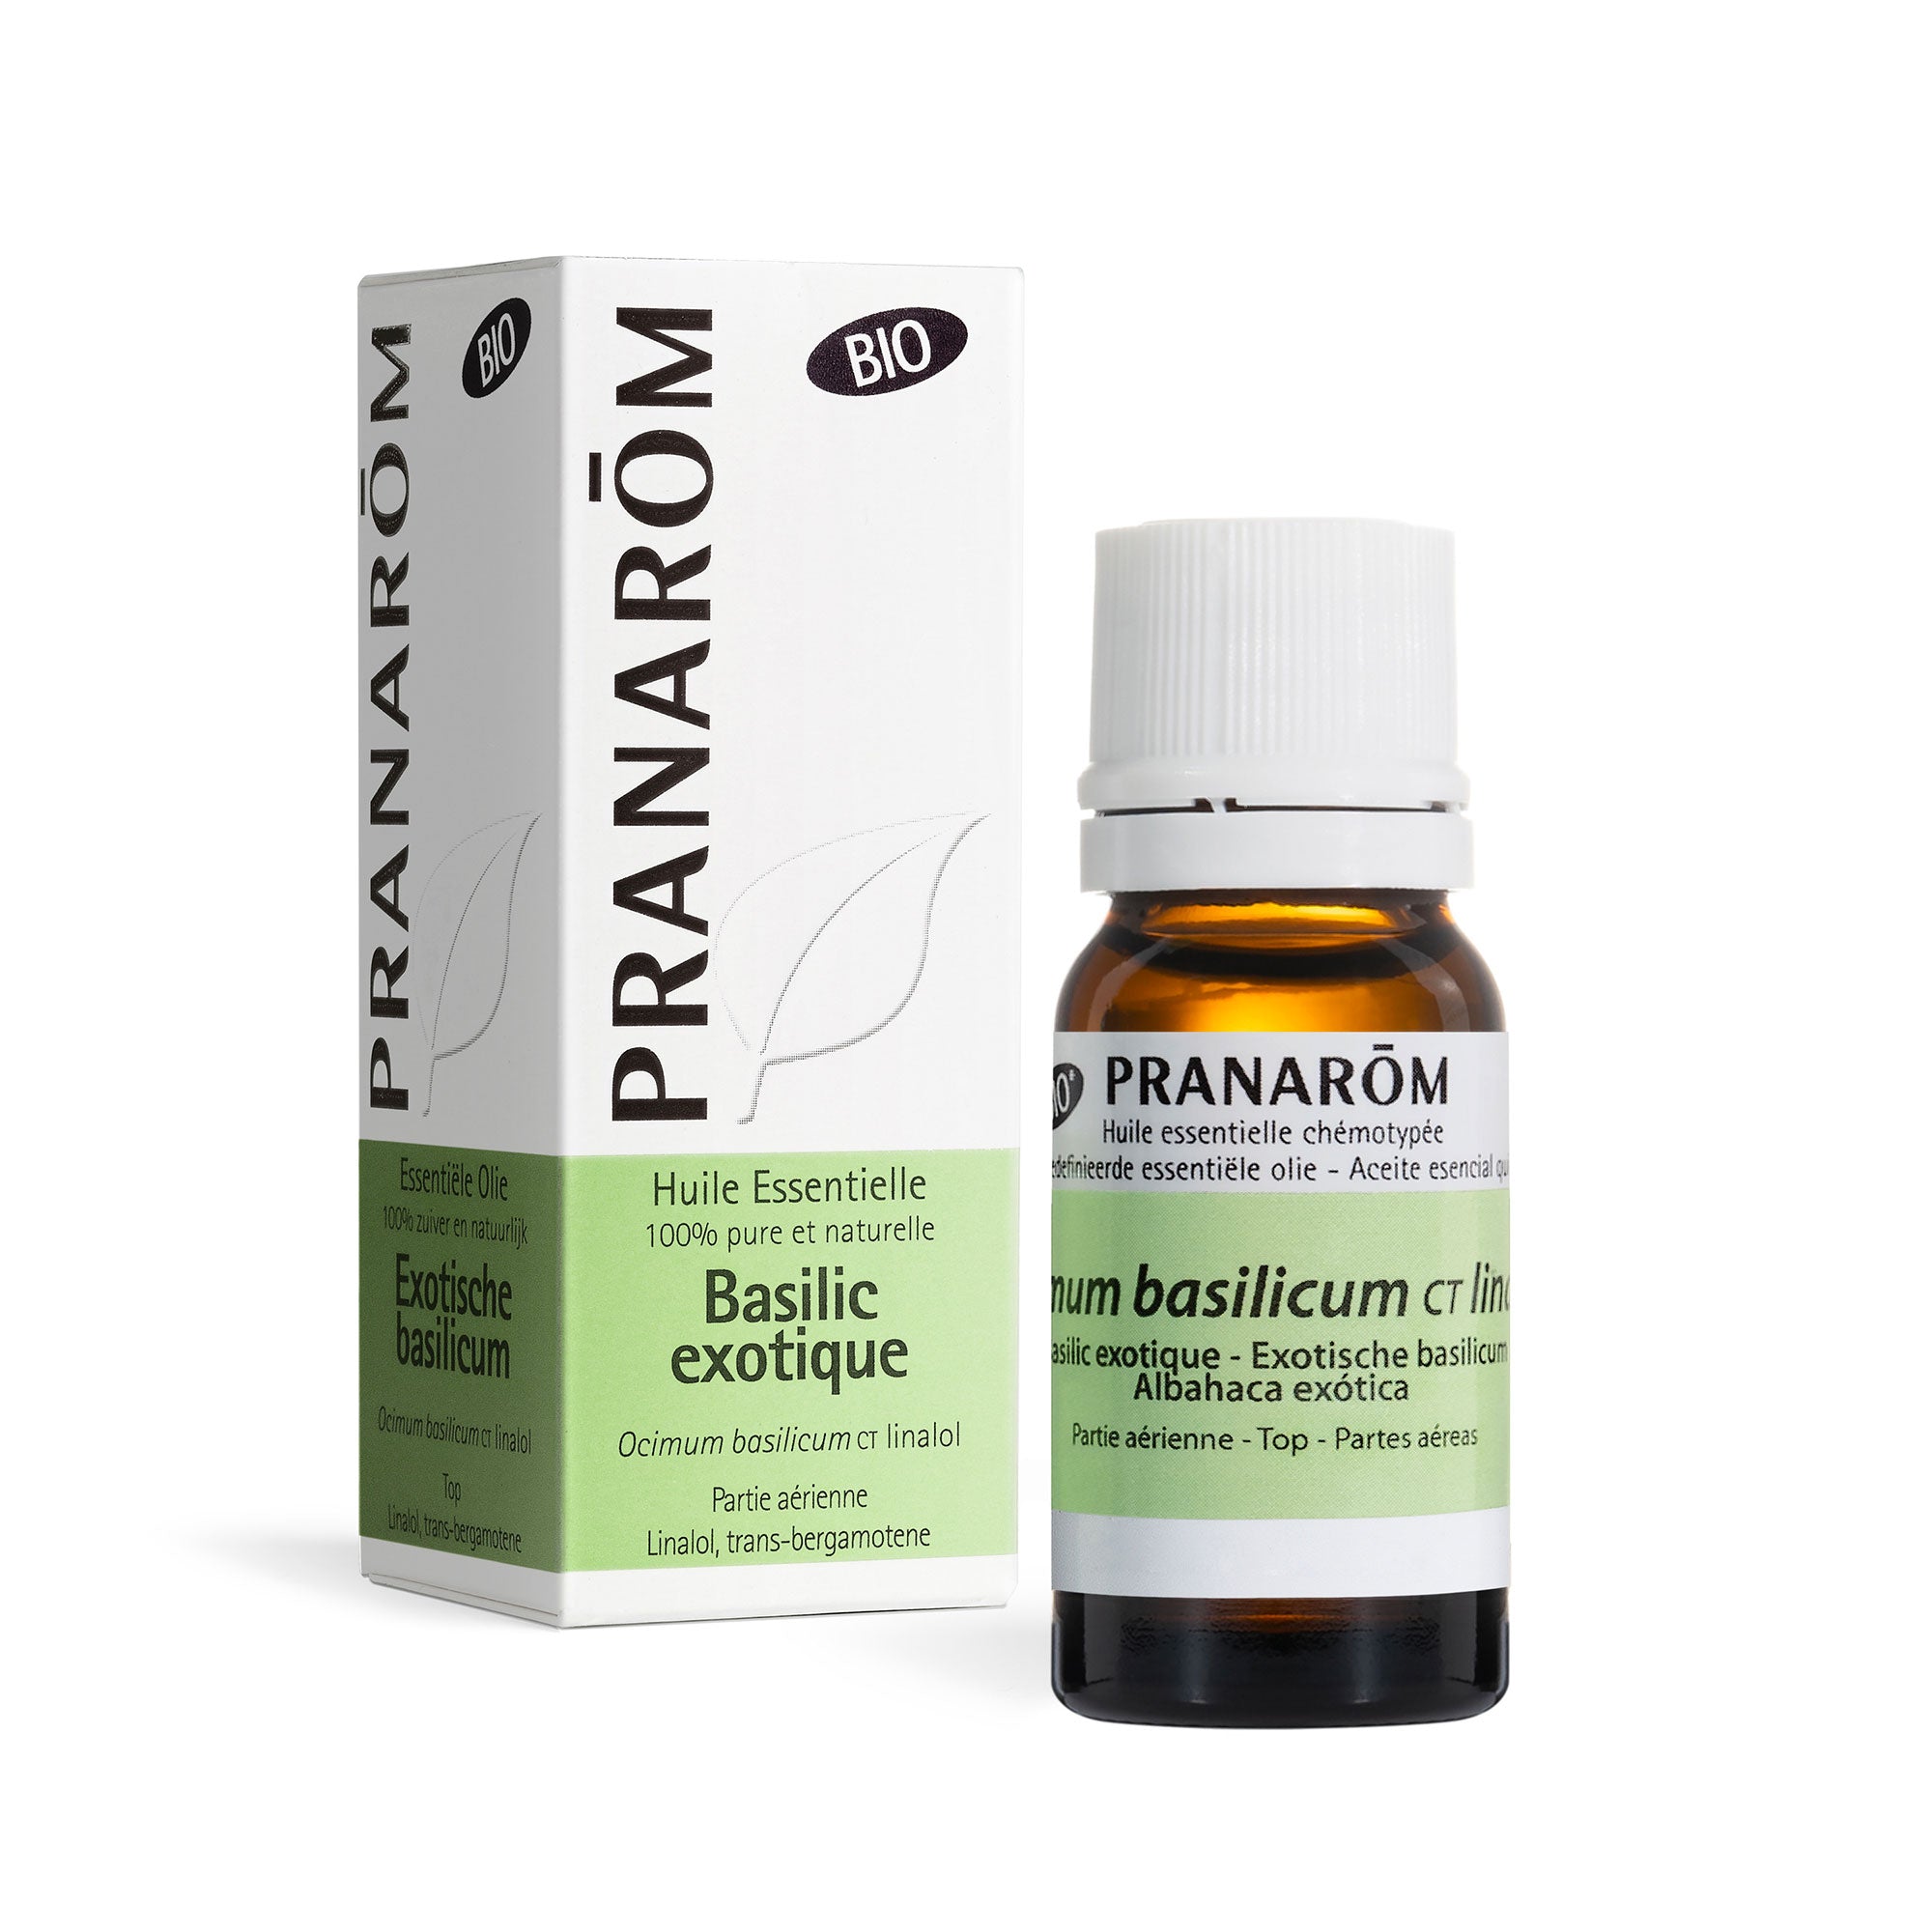 PRANAROM-Huile Anti-vergetures BIO PRANABB MATERNITE-50ml – Pharmunix